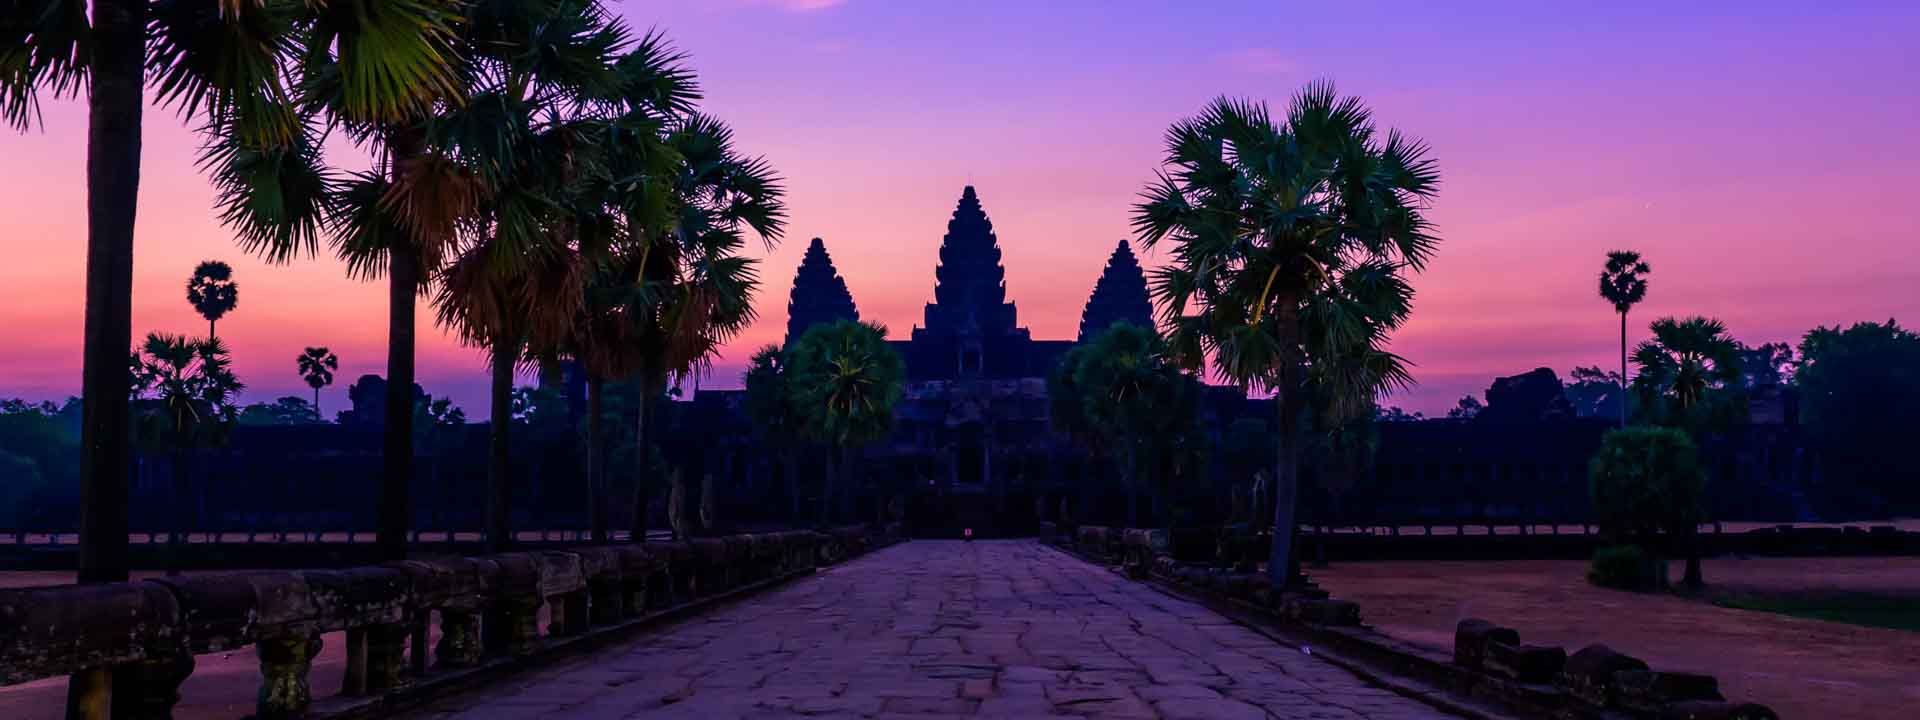 Highlights of Vietnam Cambodia Laos Thailand Tour 21 day